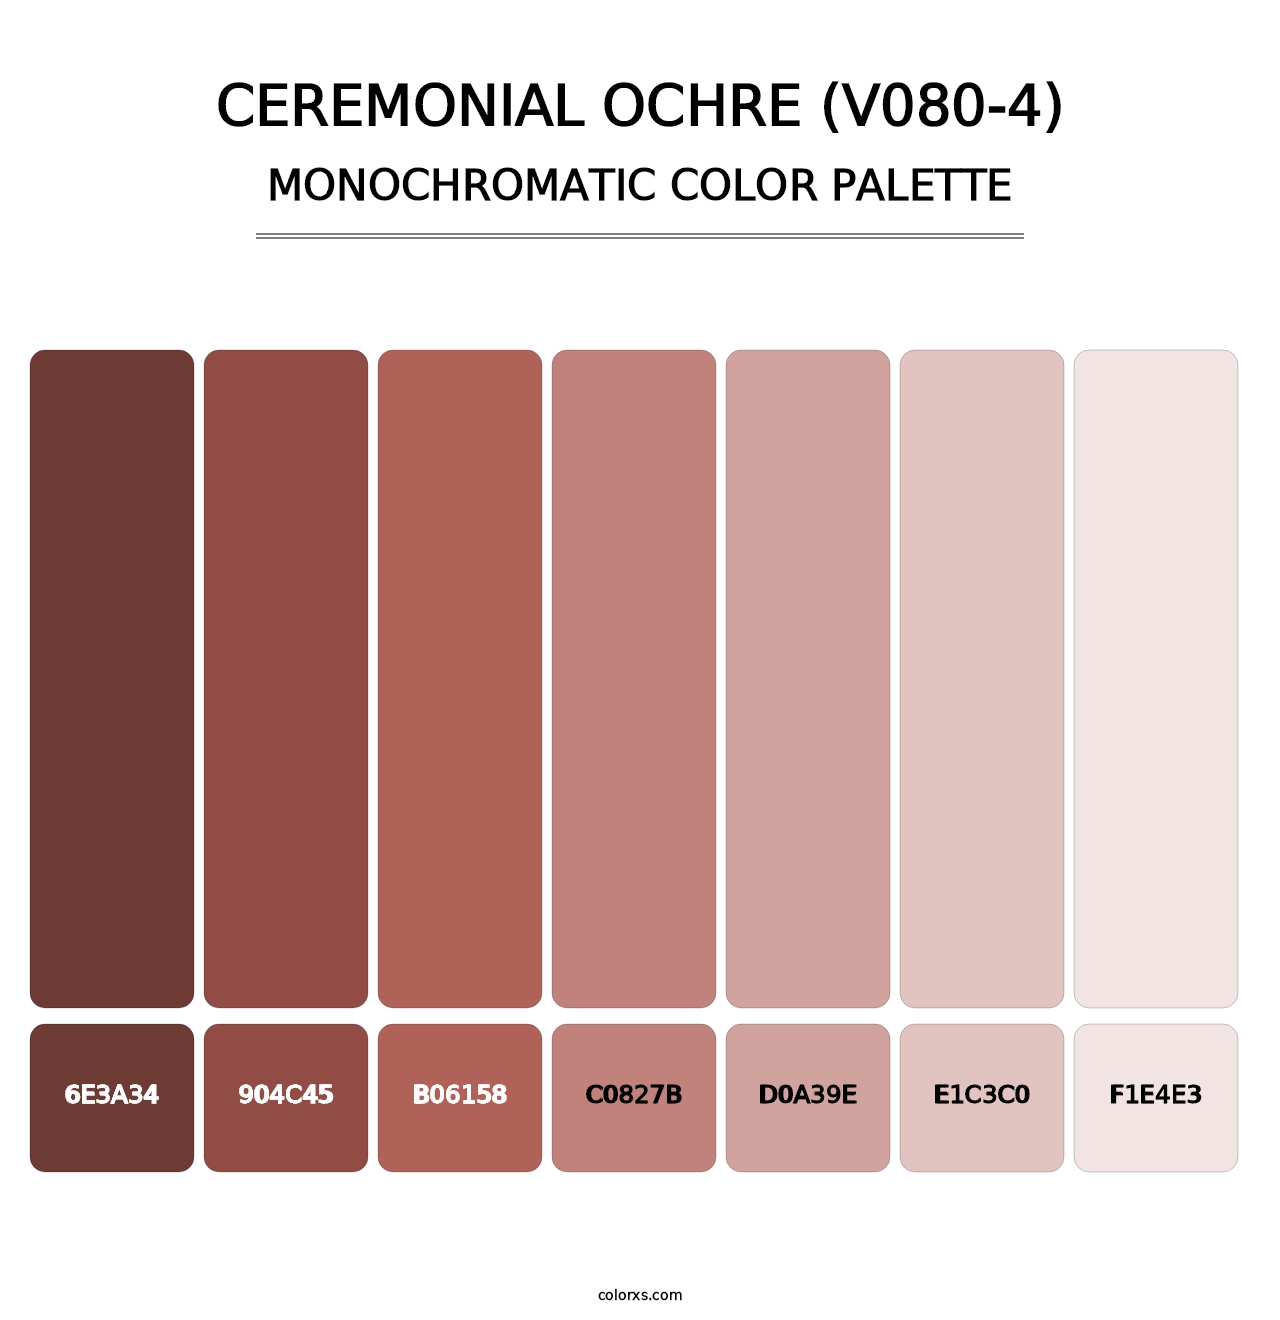 Ceremonial Ochre (V080-4) - Monochromatic Color Palette